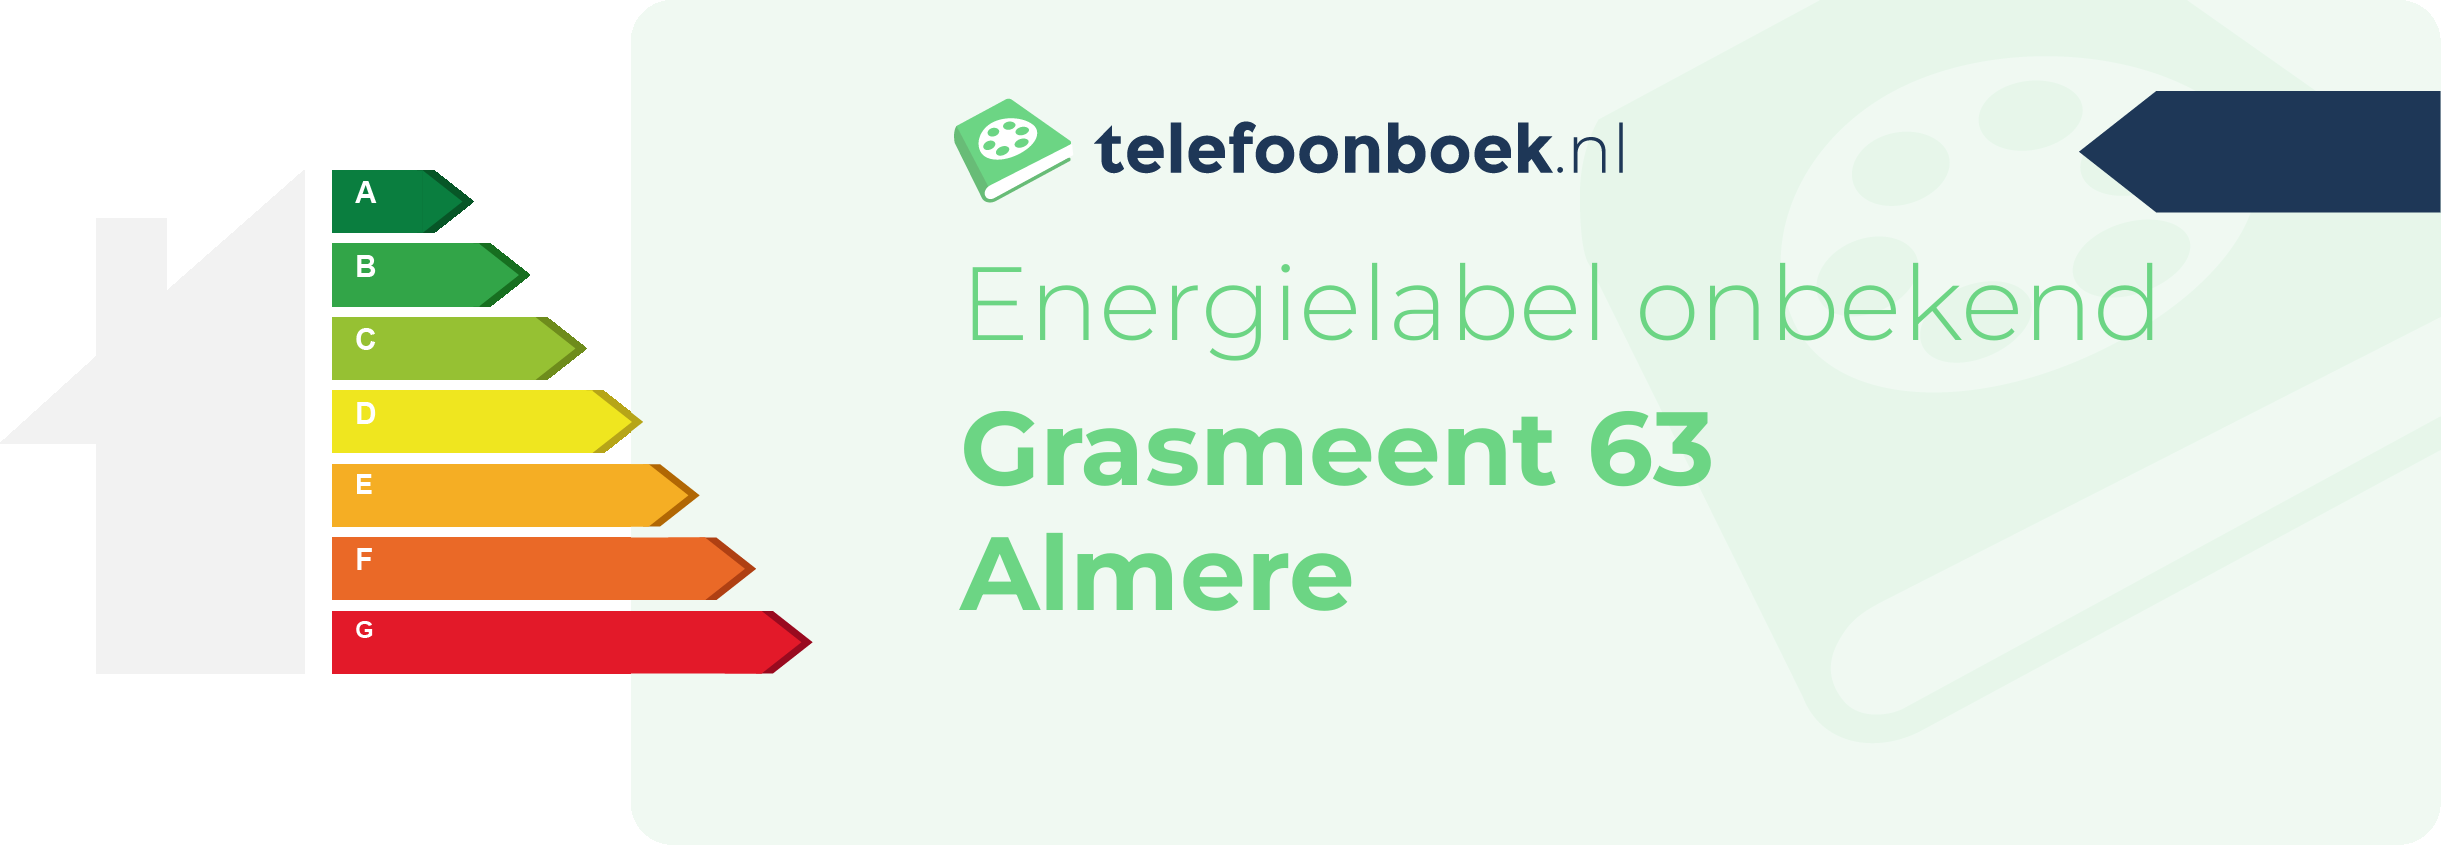 Energielabel Grasmeent 63 Almere